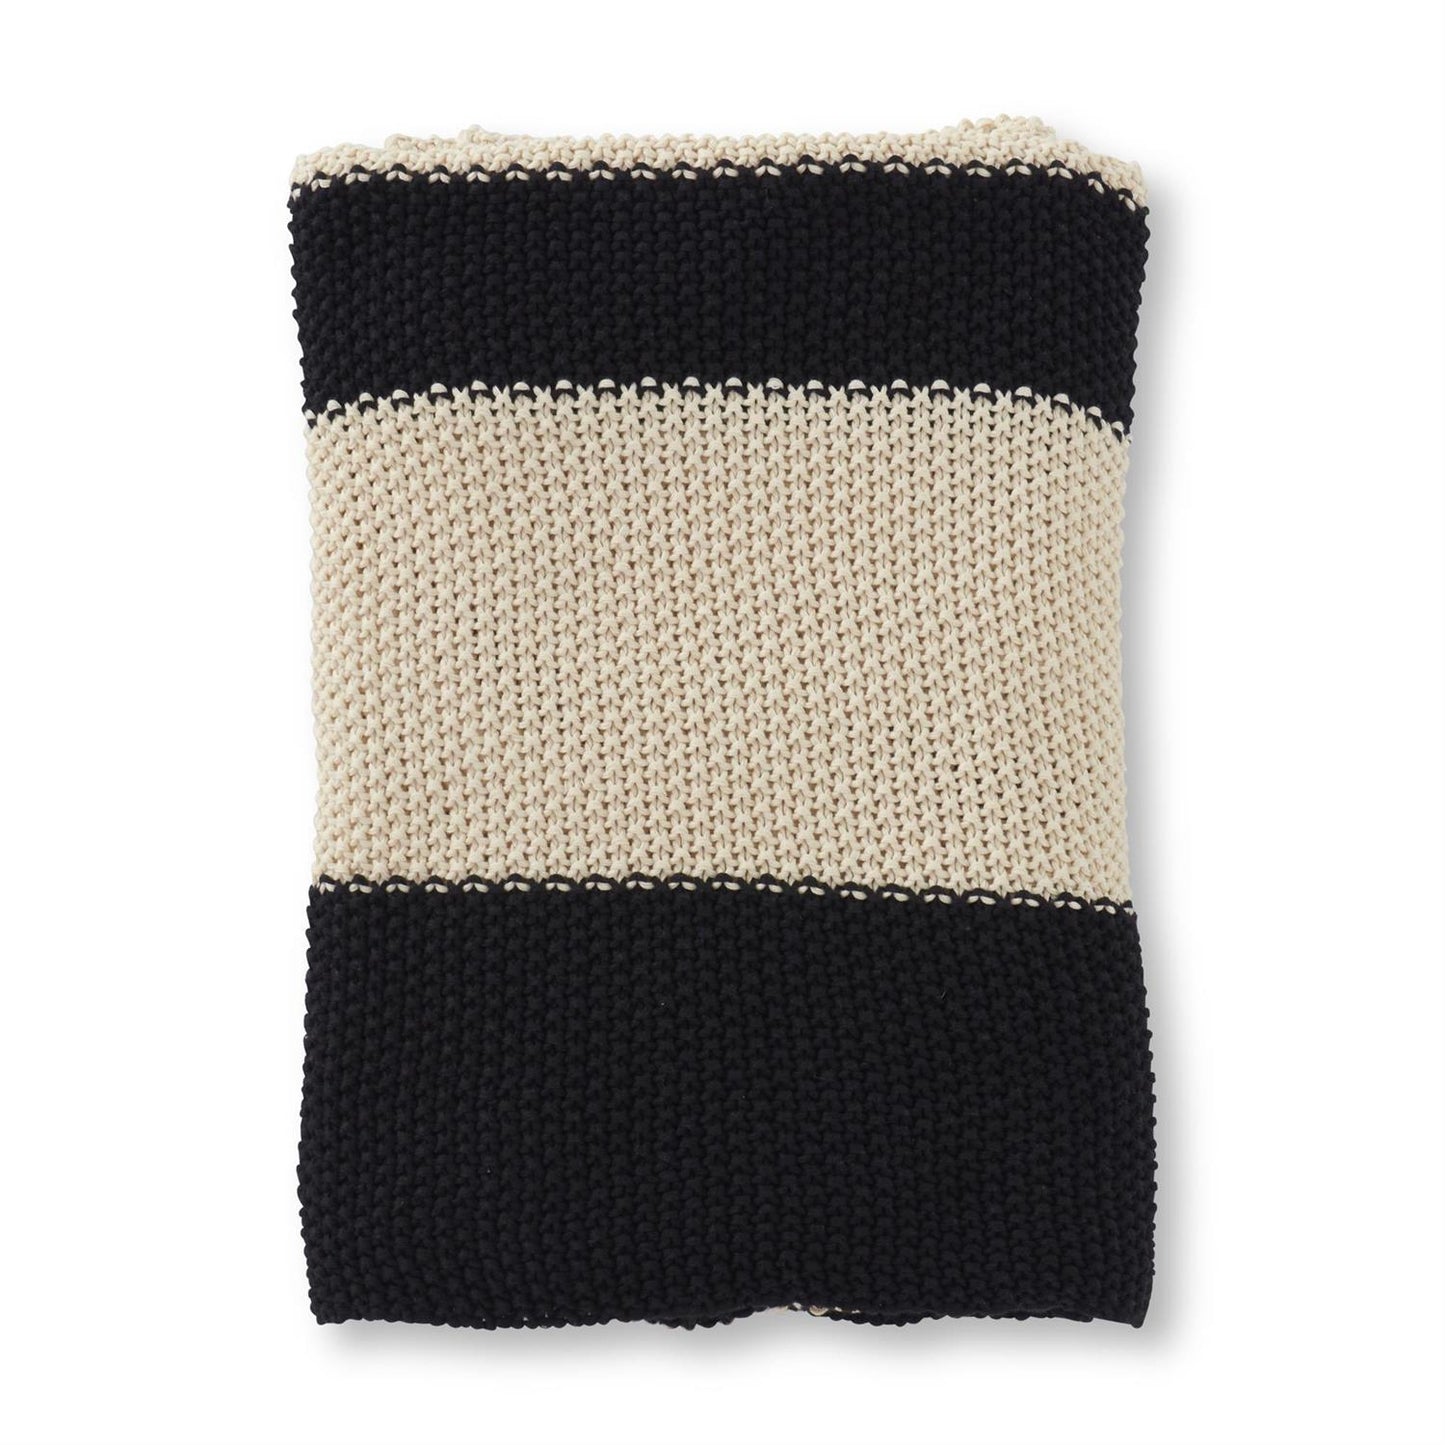 Cotton Knit Black & Cream Striped Throw Blanket